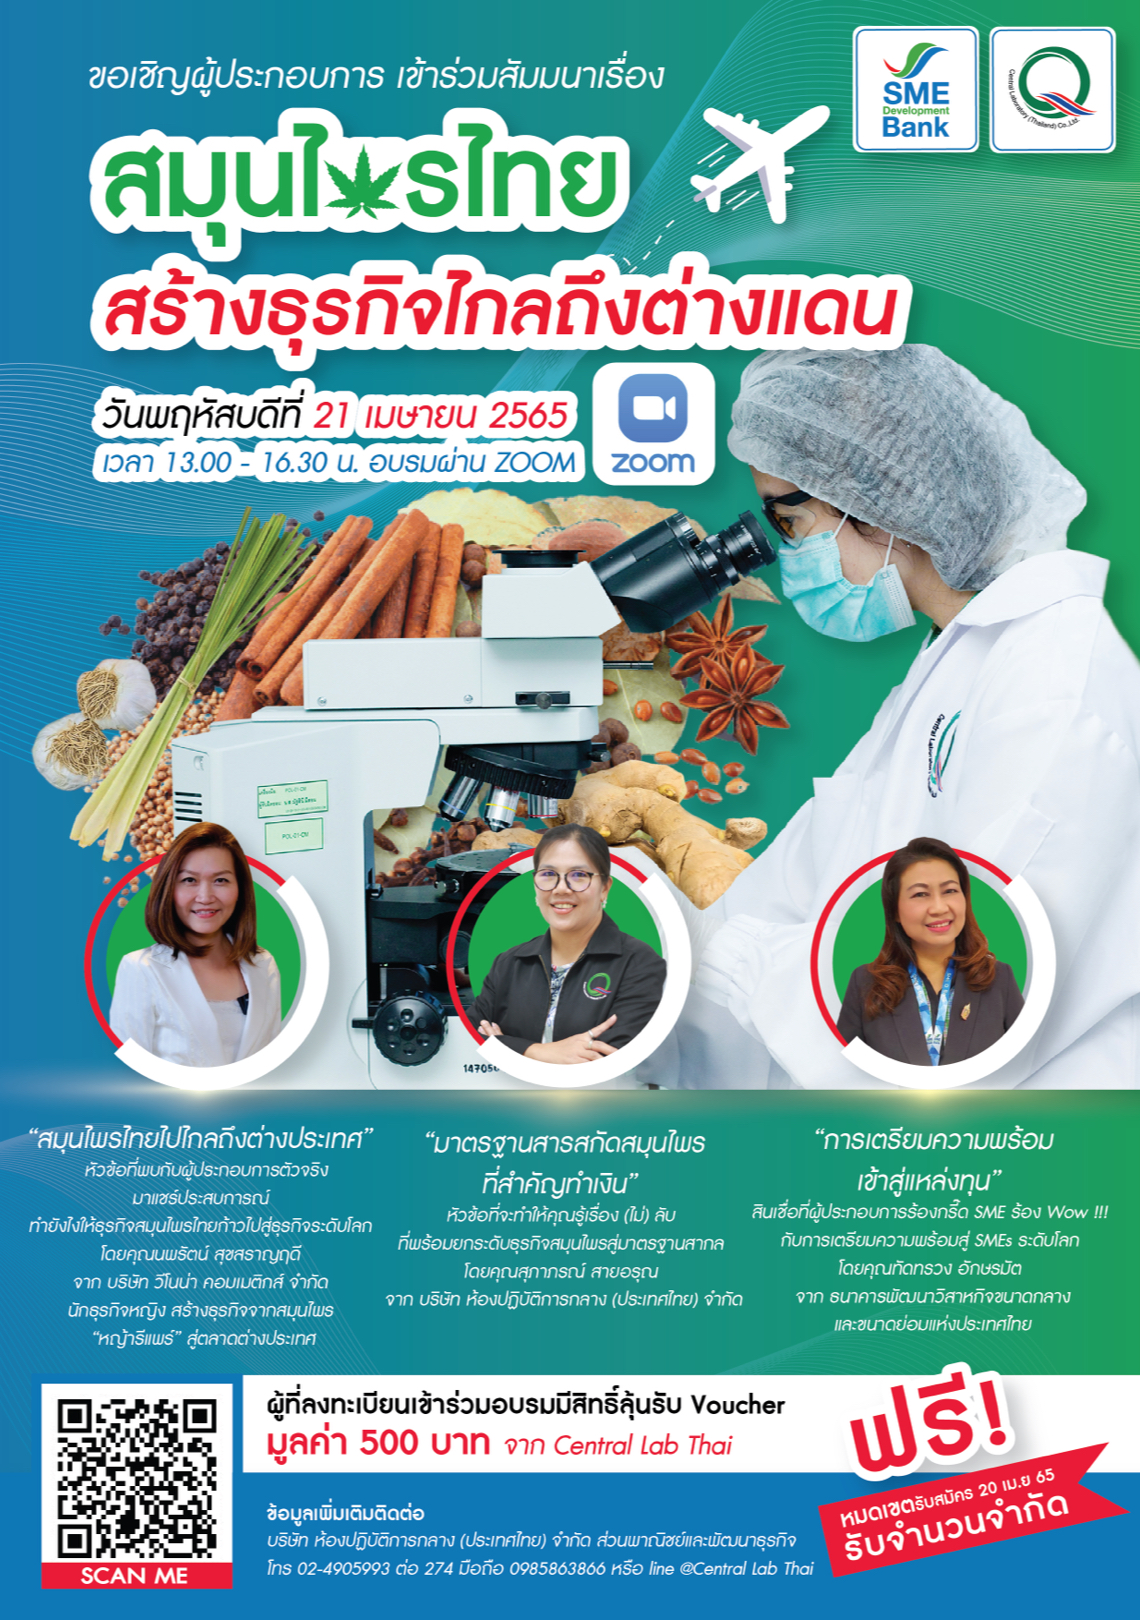 SME D Bank ผนึก ‘เซ็นทรัลแล็บไทย’ จัดสัมมนา ฟรี! เพื่อผู้ประกอบการ  ‘สมุนไพรไทย สร้างธุรกิจไกลถึงต่างแดน’ 21 เม.ย. นี้